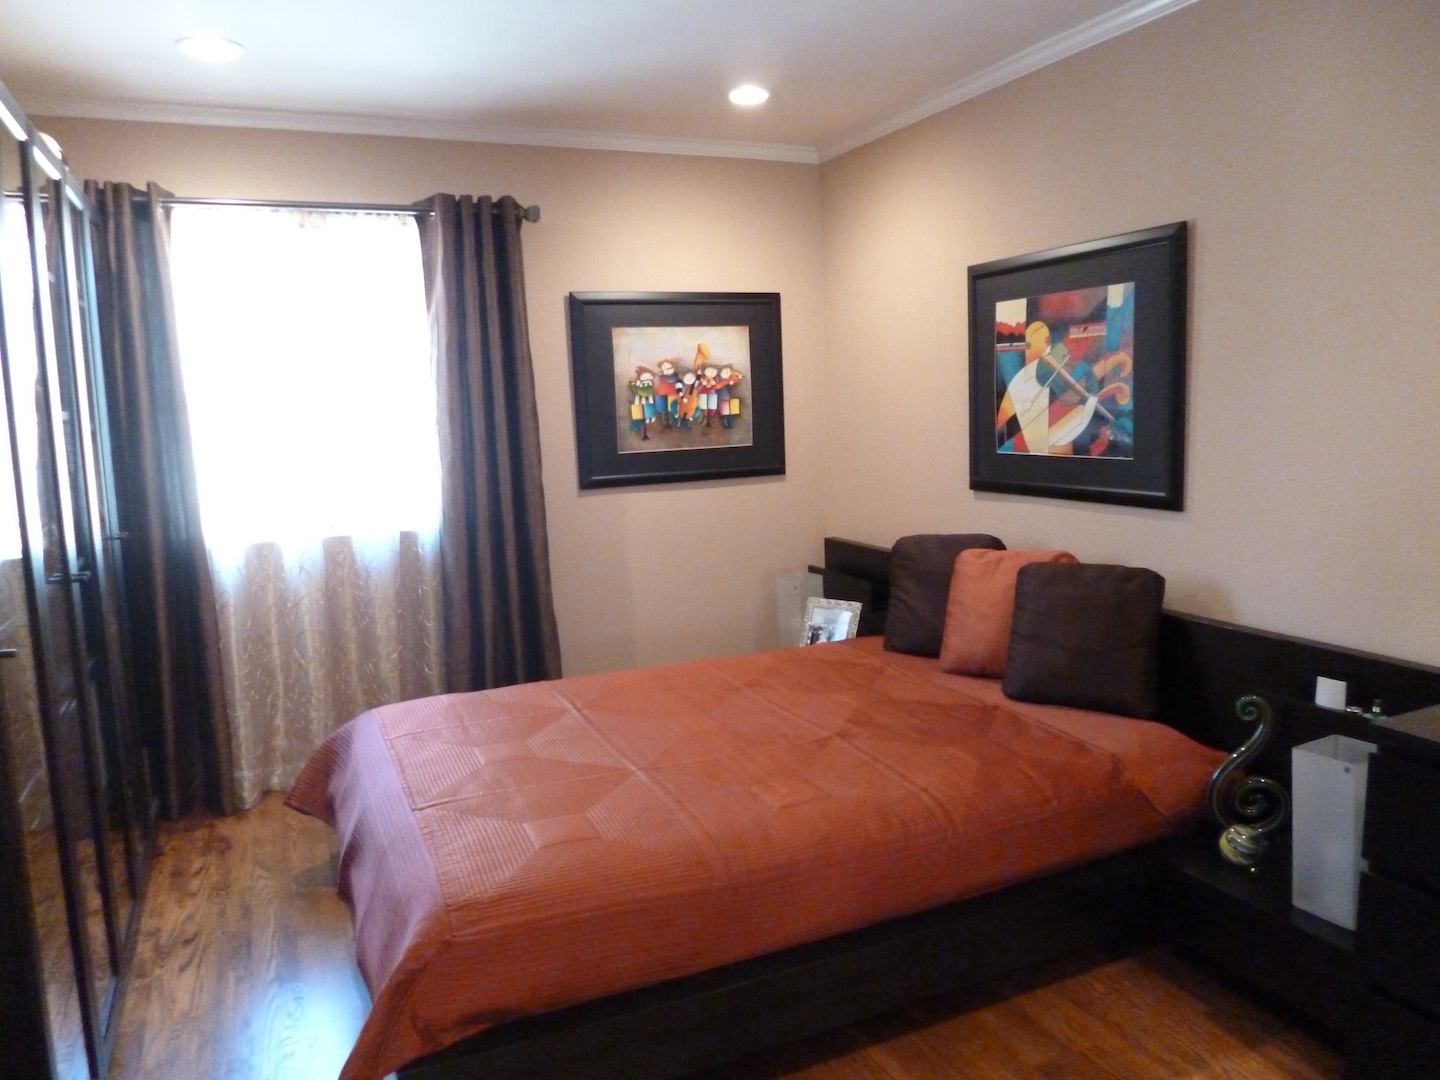 Bedroom Design & Color – Deep Sand (SF Peninsula, CA)